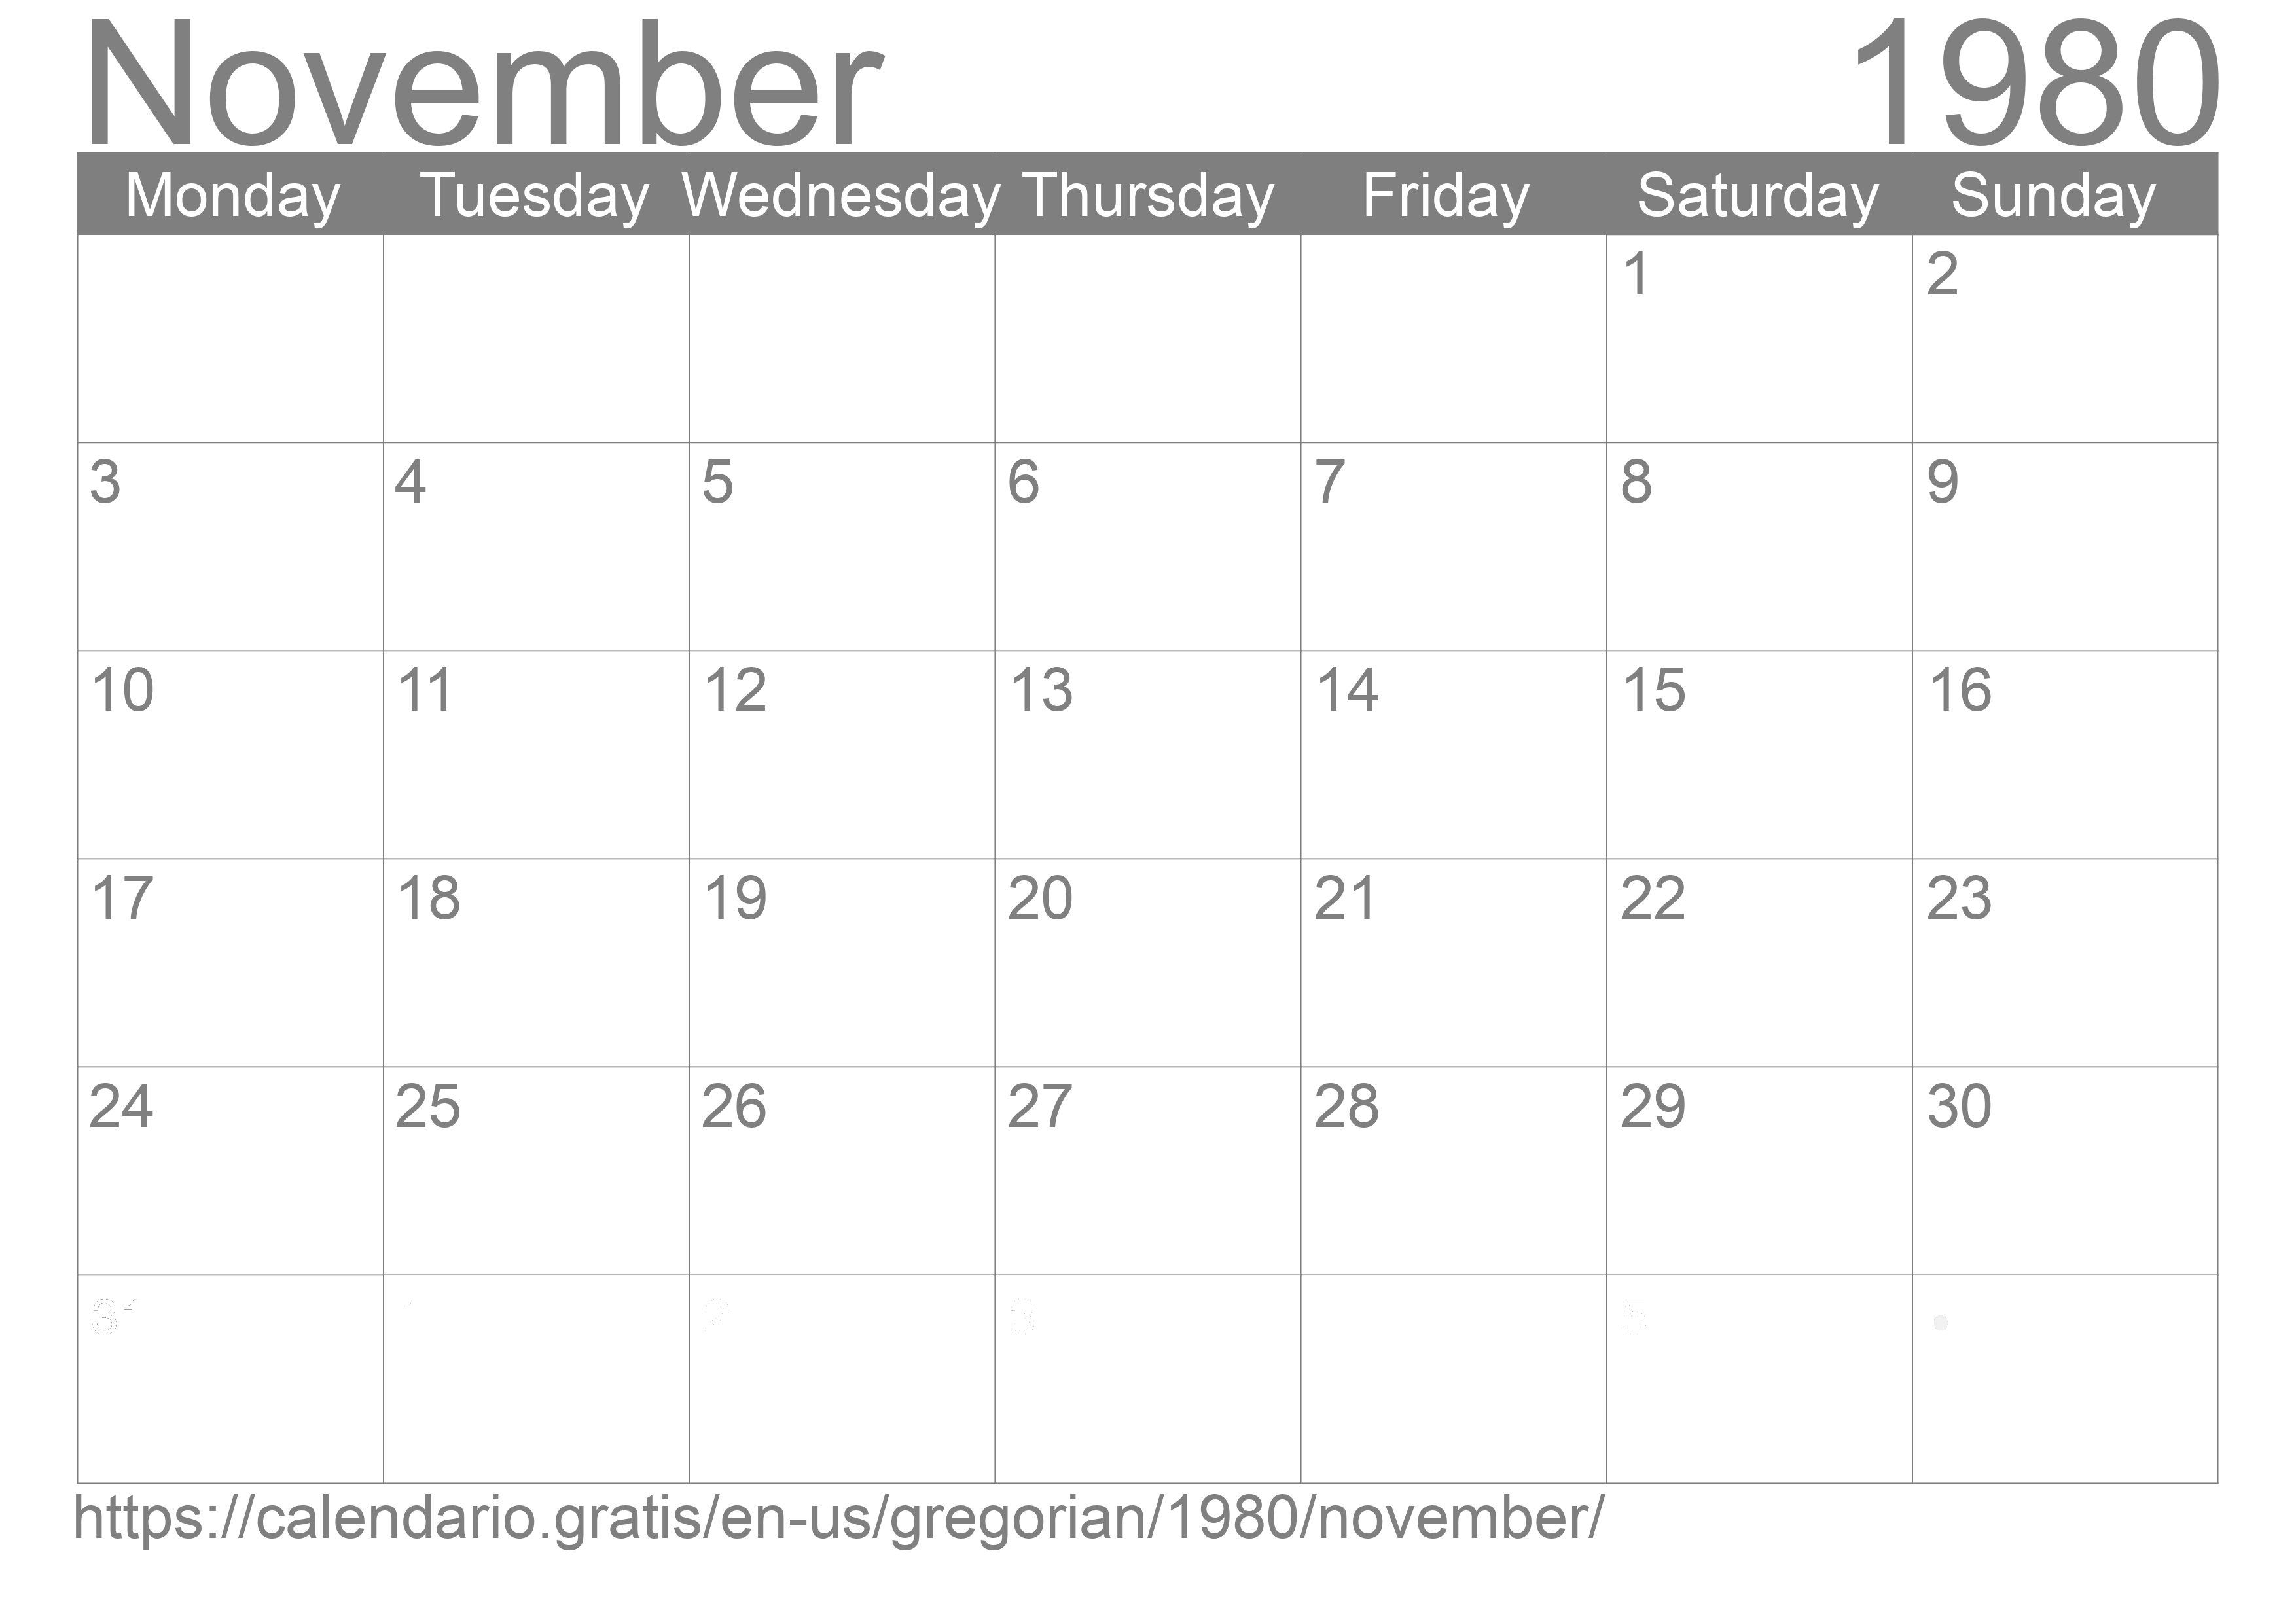 Calendar November 1980 to print